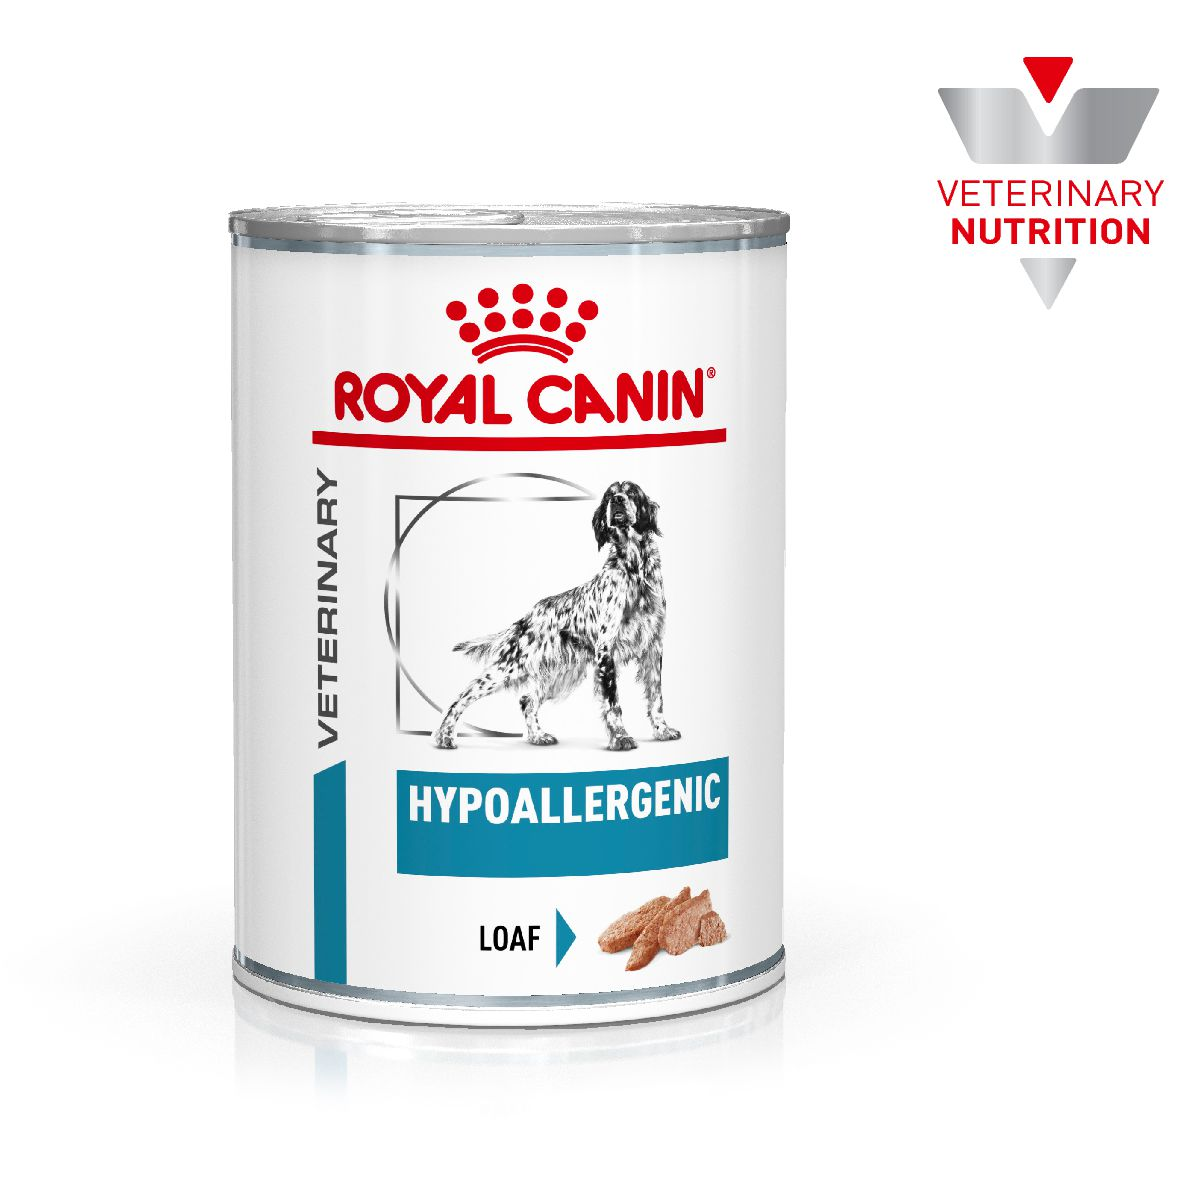 royal canin dog hypoallergenic 14 kg